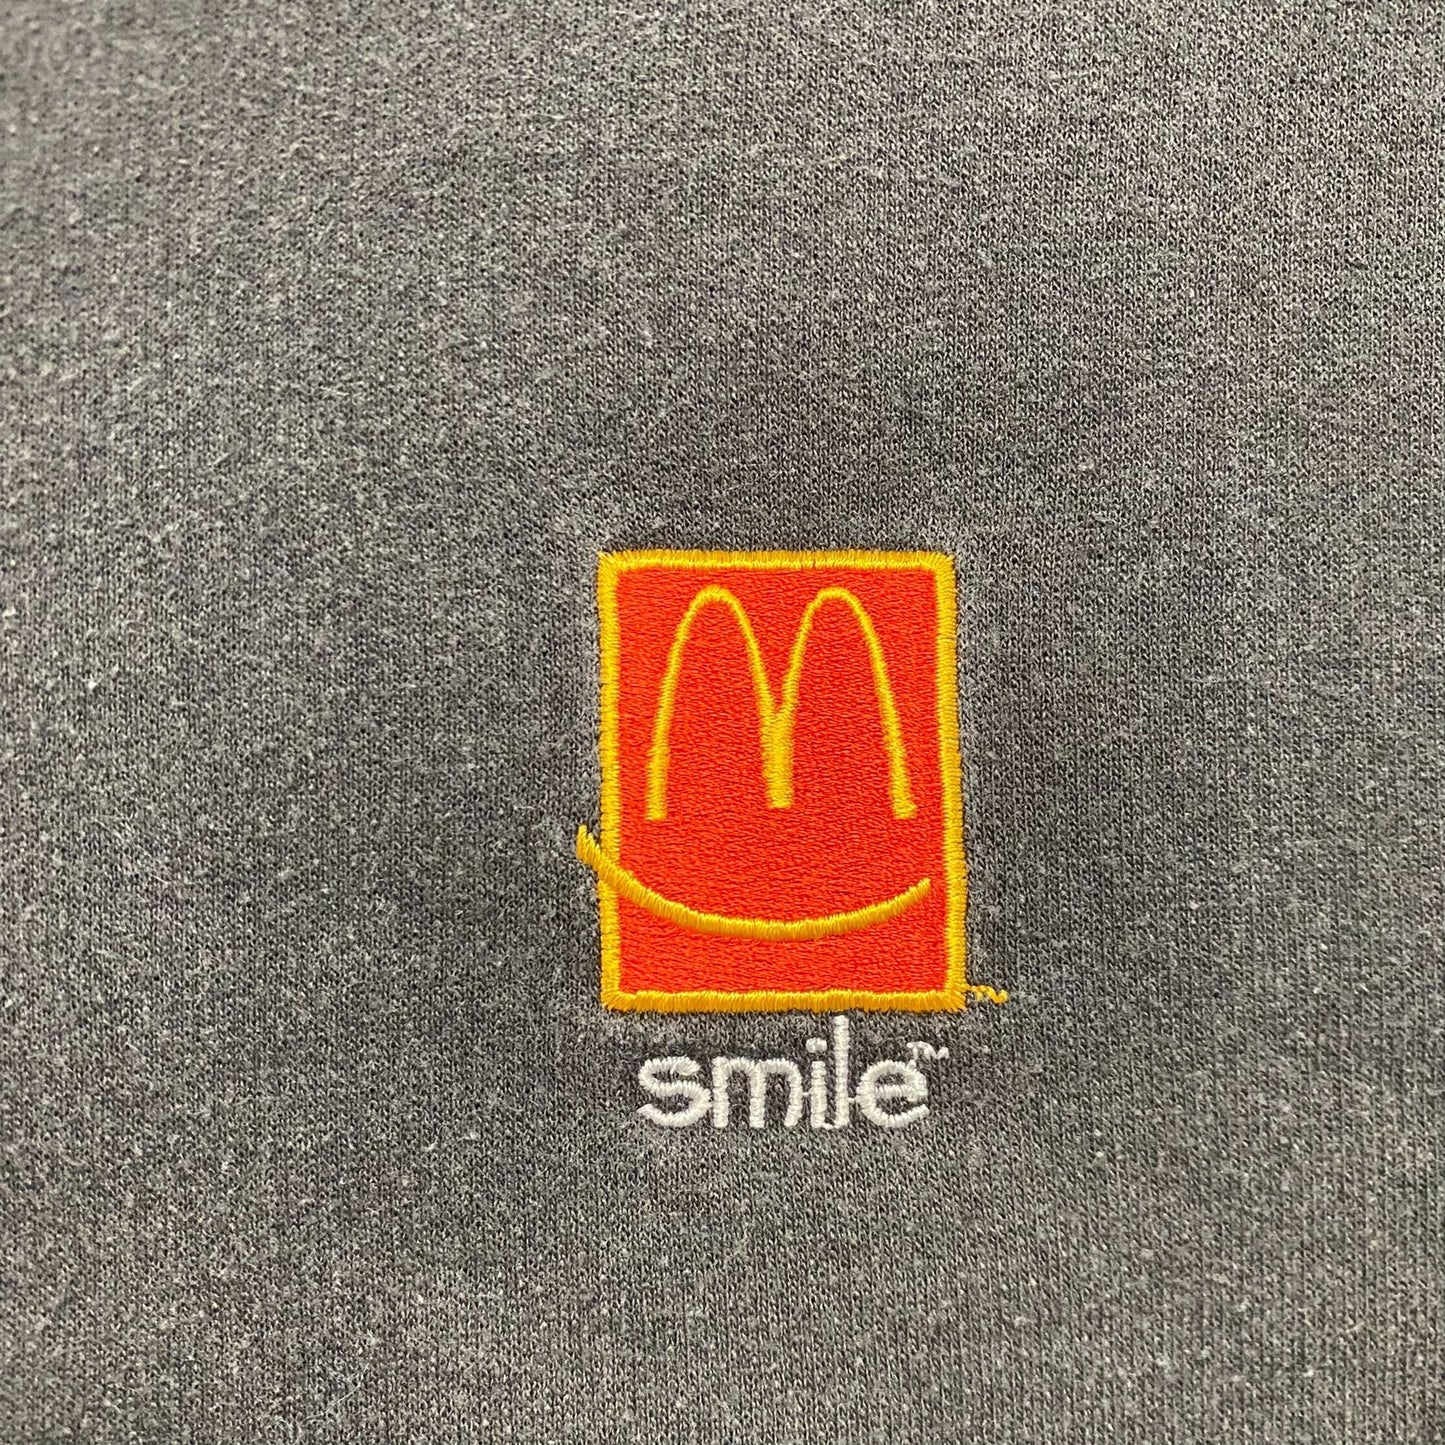 Vintage 90s McDonald's Smile Sun Faded Crewneck Sweatshirt